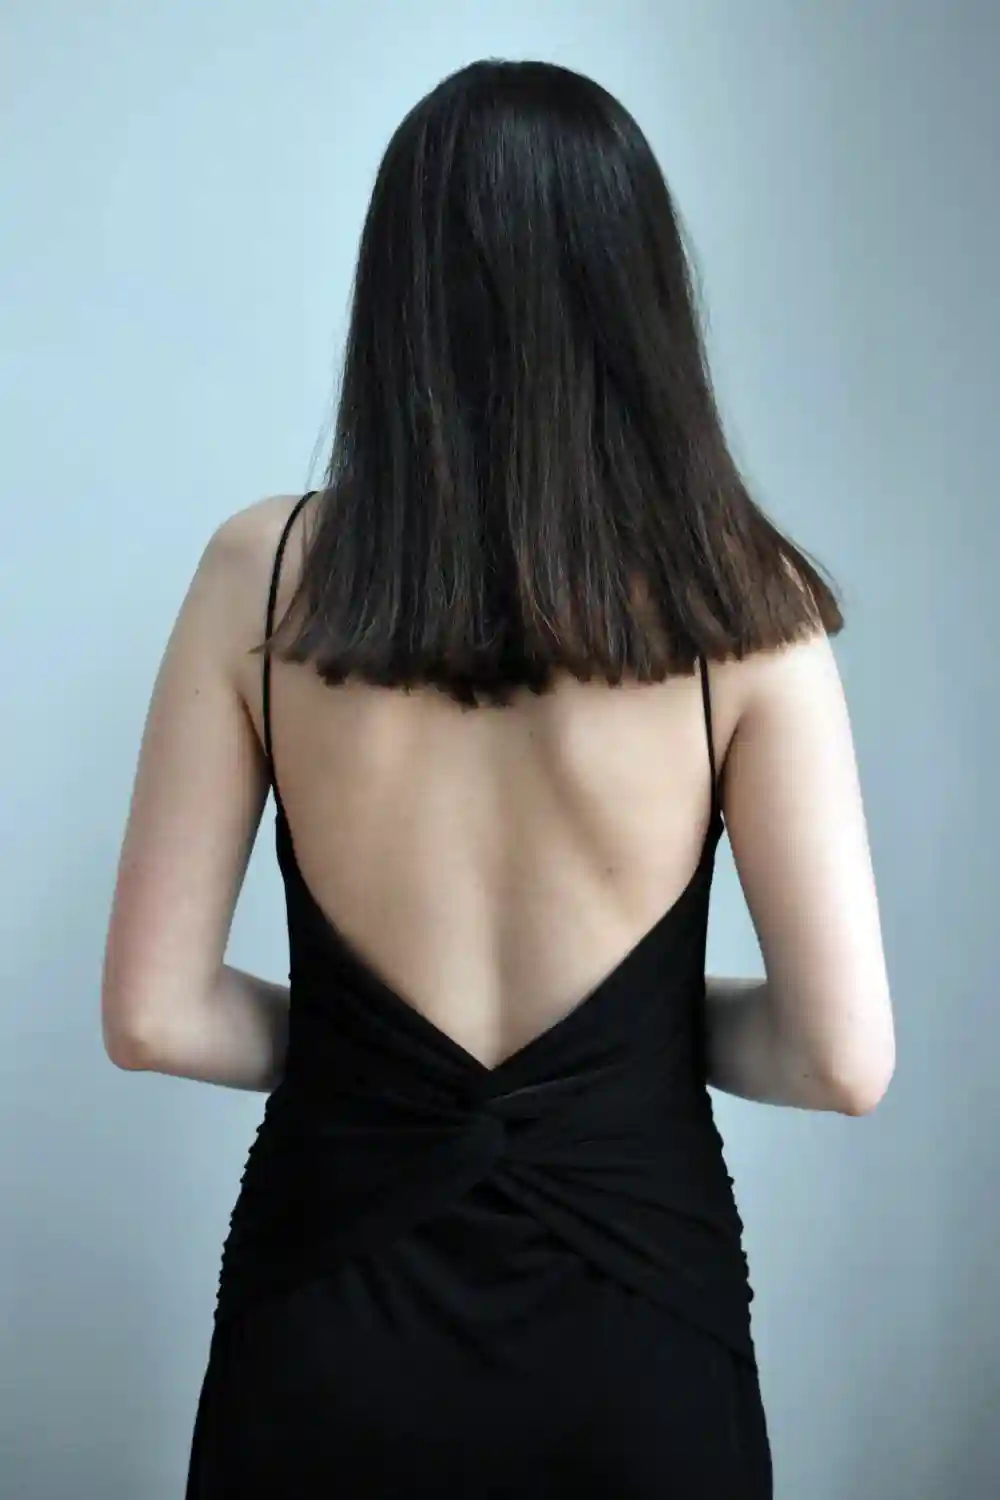 Woman Wearing a Black Backless Dress